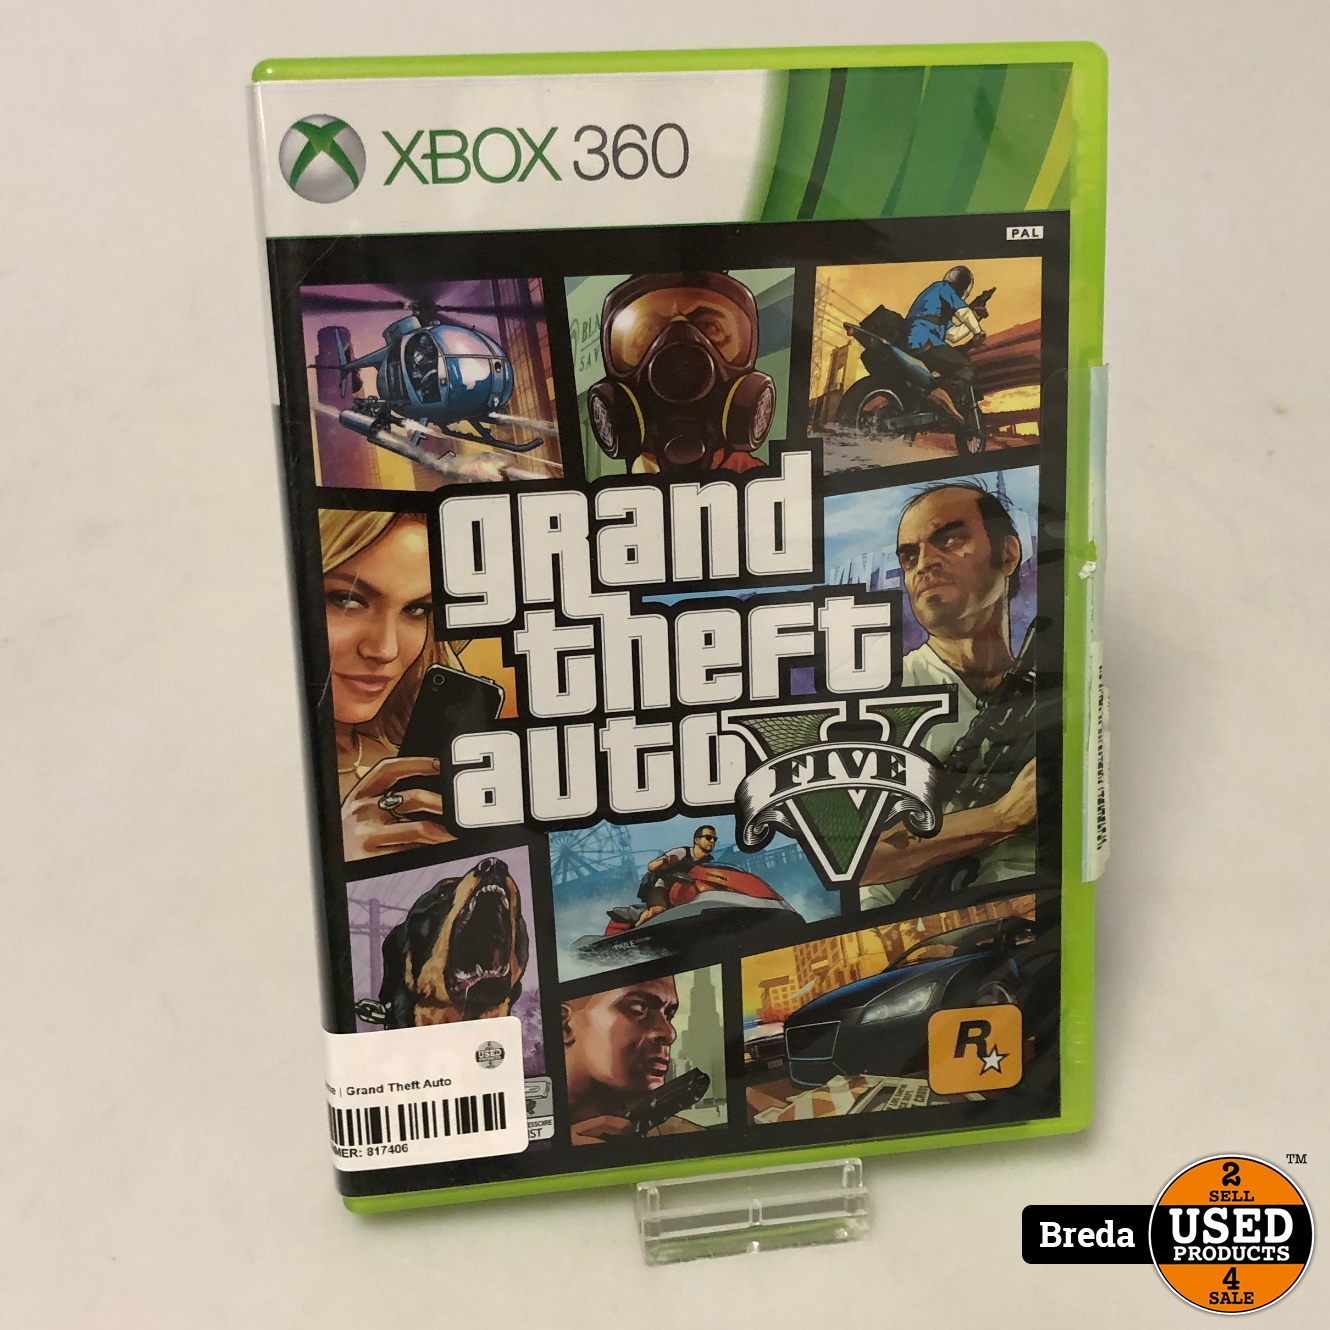 capaciteit dun bibliotheek Xbox 360 spel | Grand Theft Auto Five - Used Products Breda